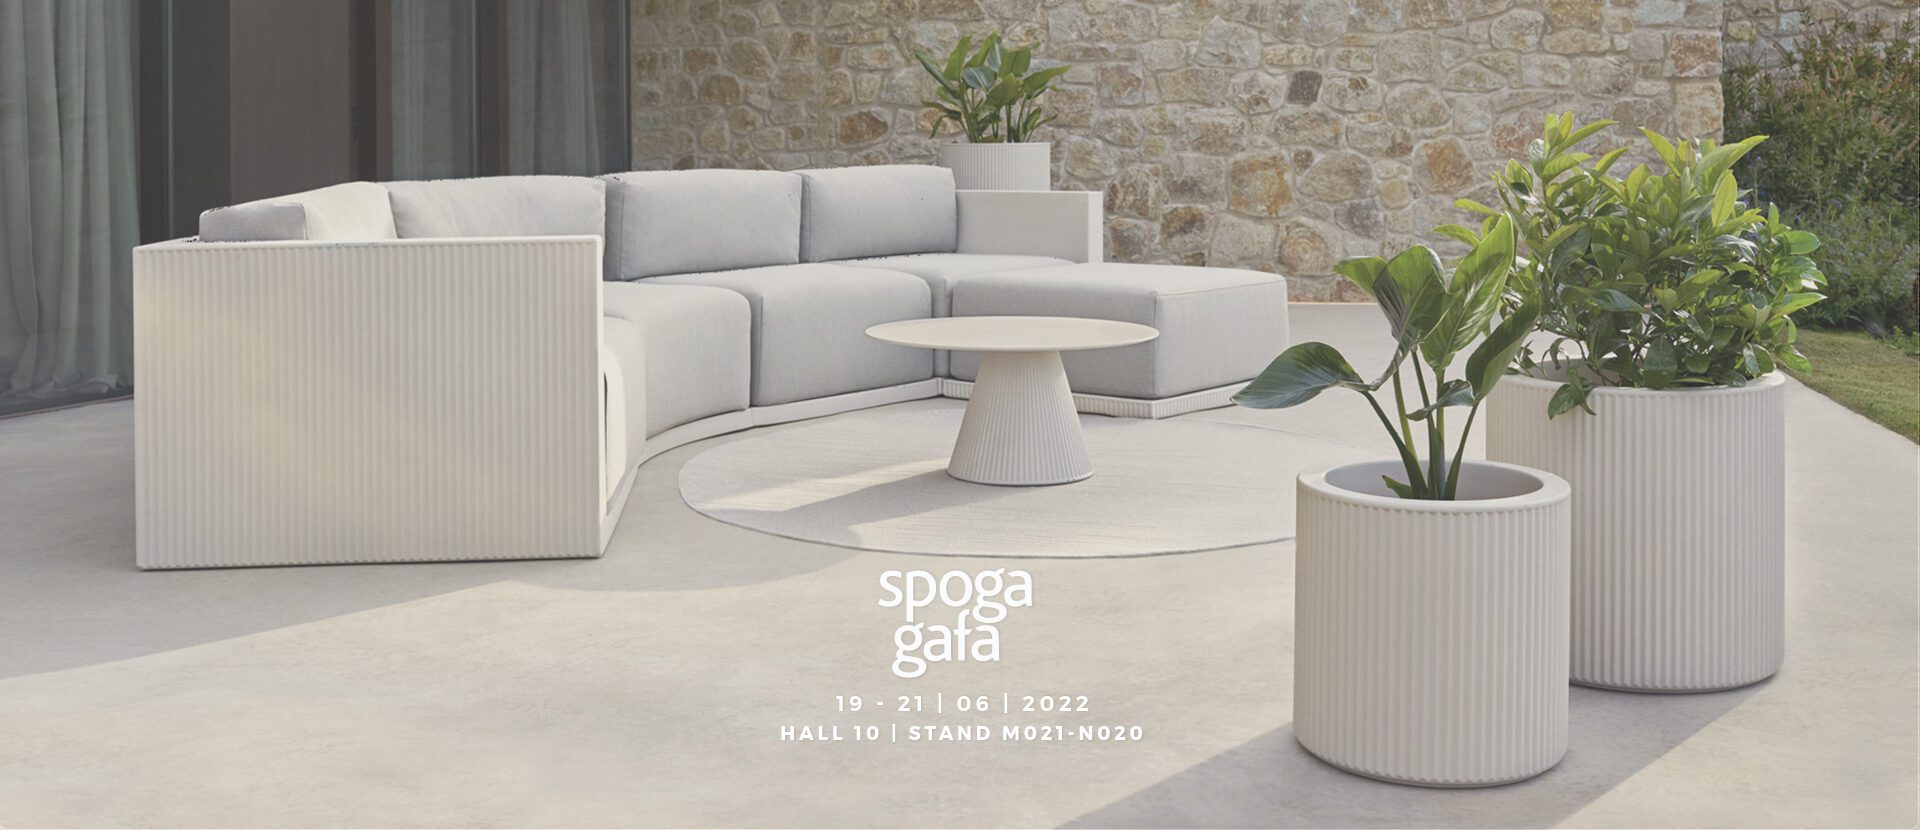 Vondom's furniture for garden | Spoga Gafa 2022